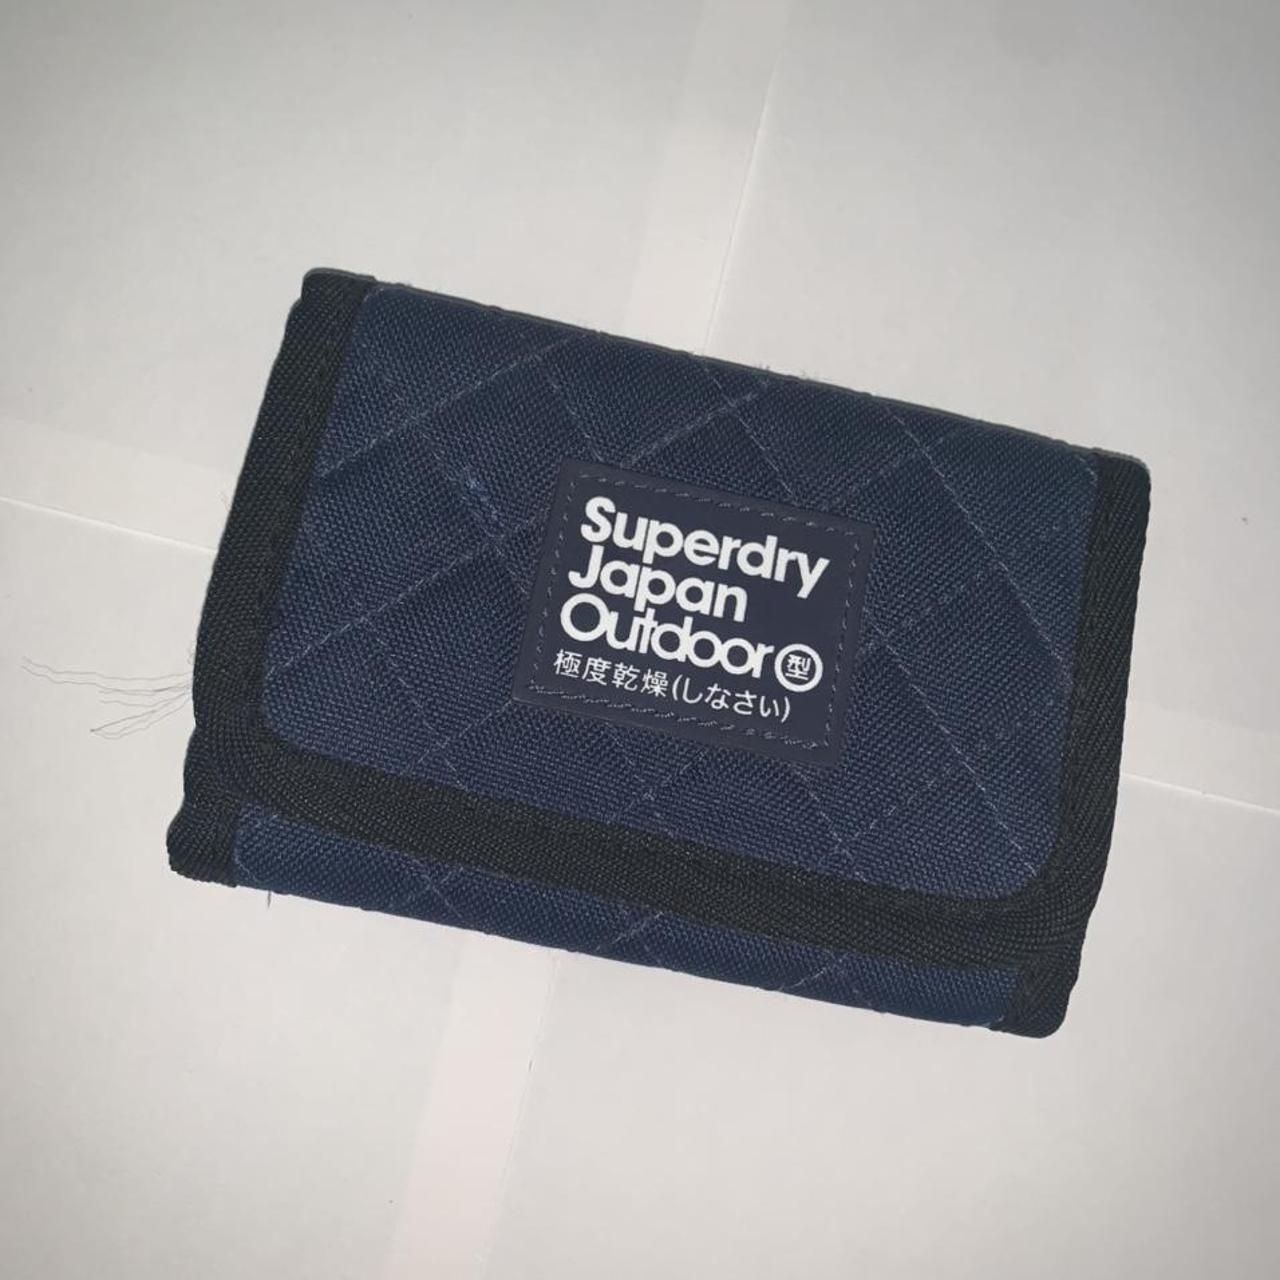 SuperDry wallet. #superdry #wallet - Depop